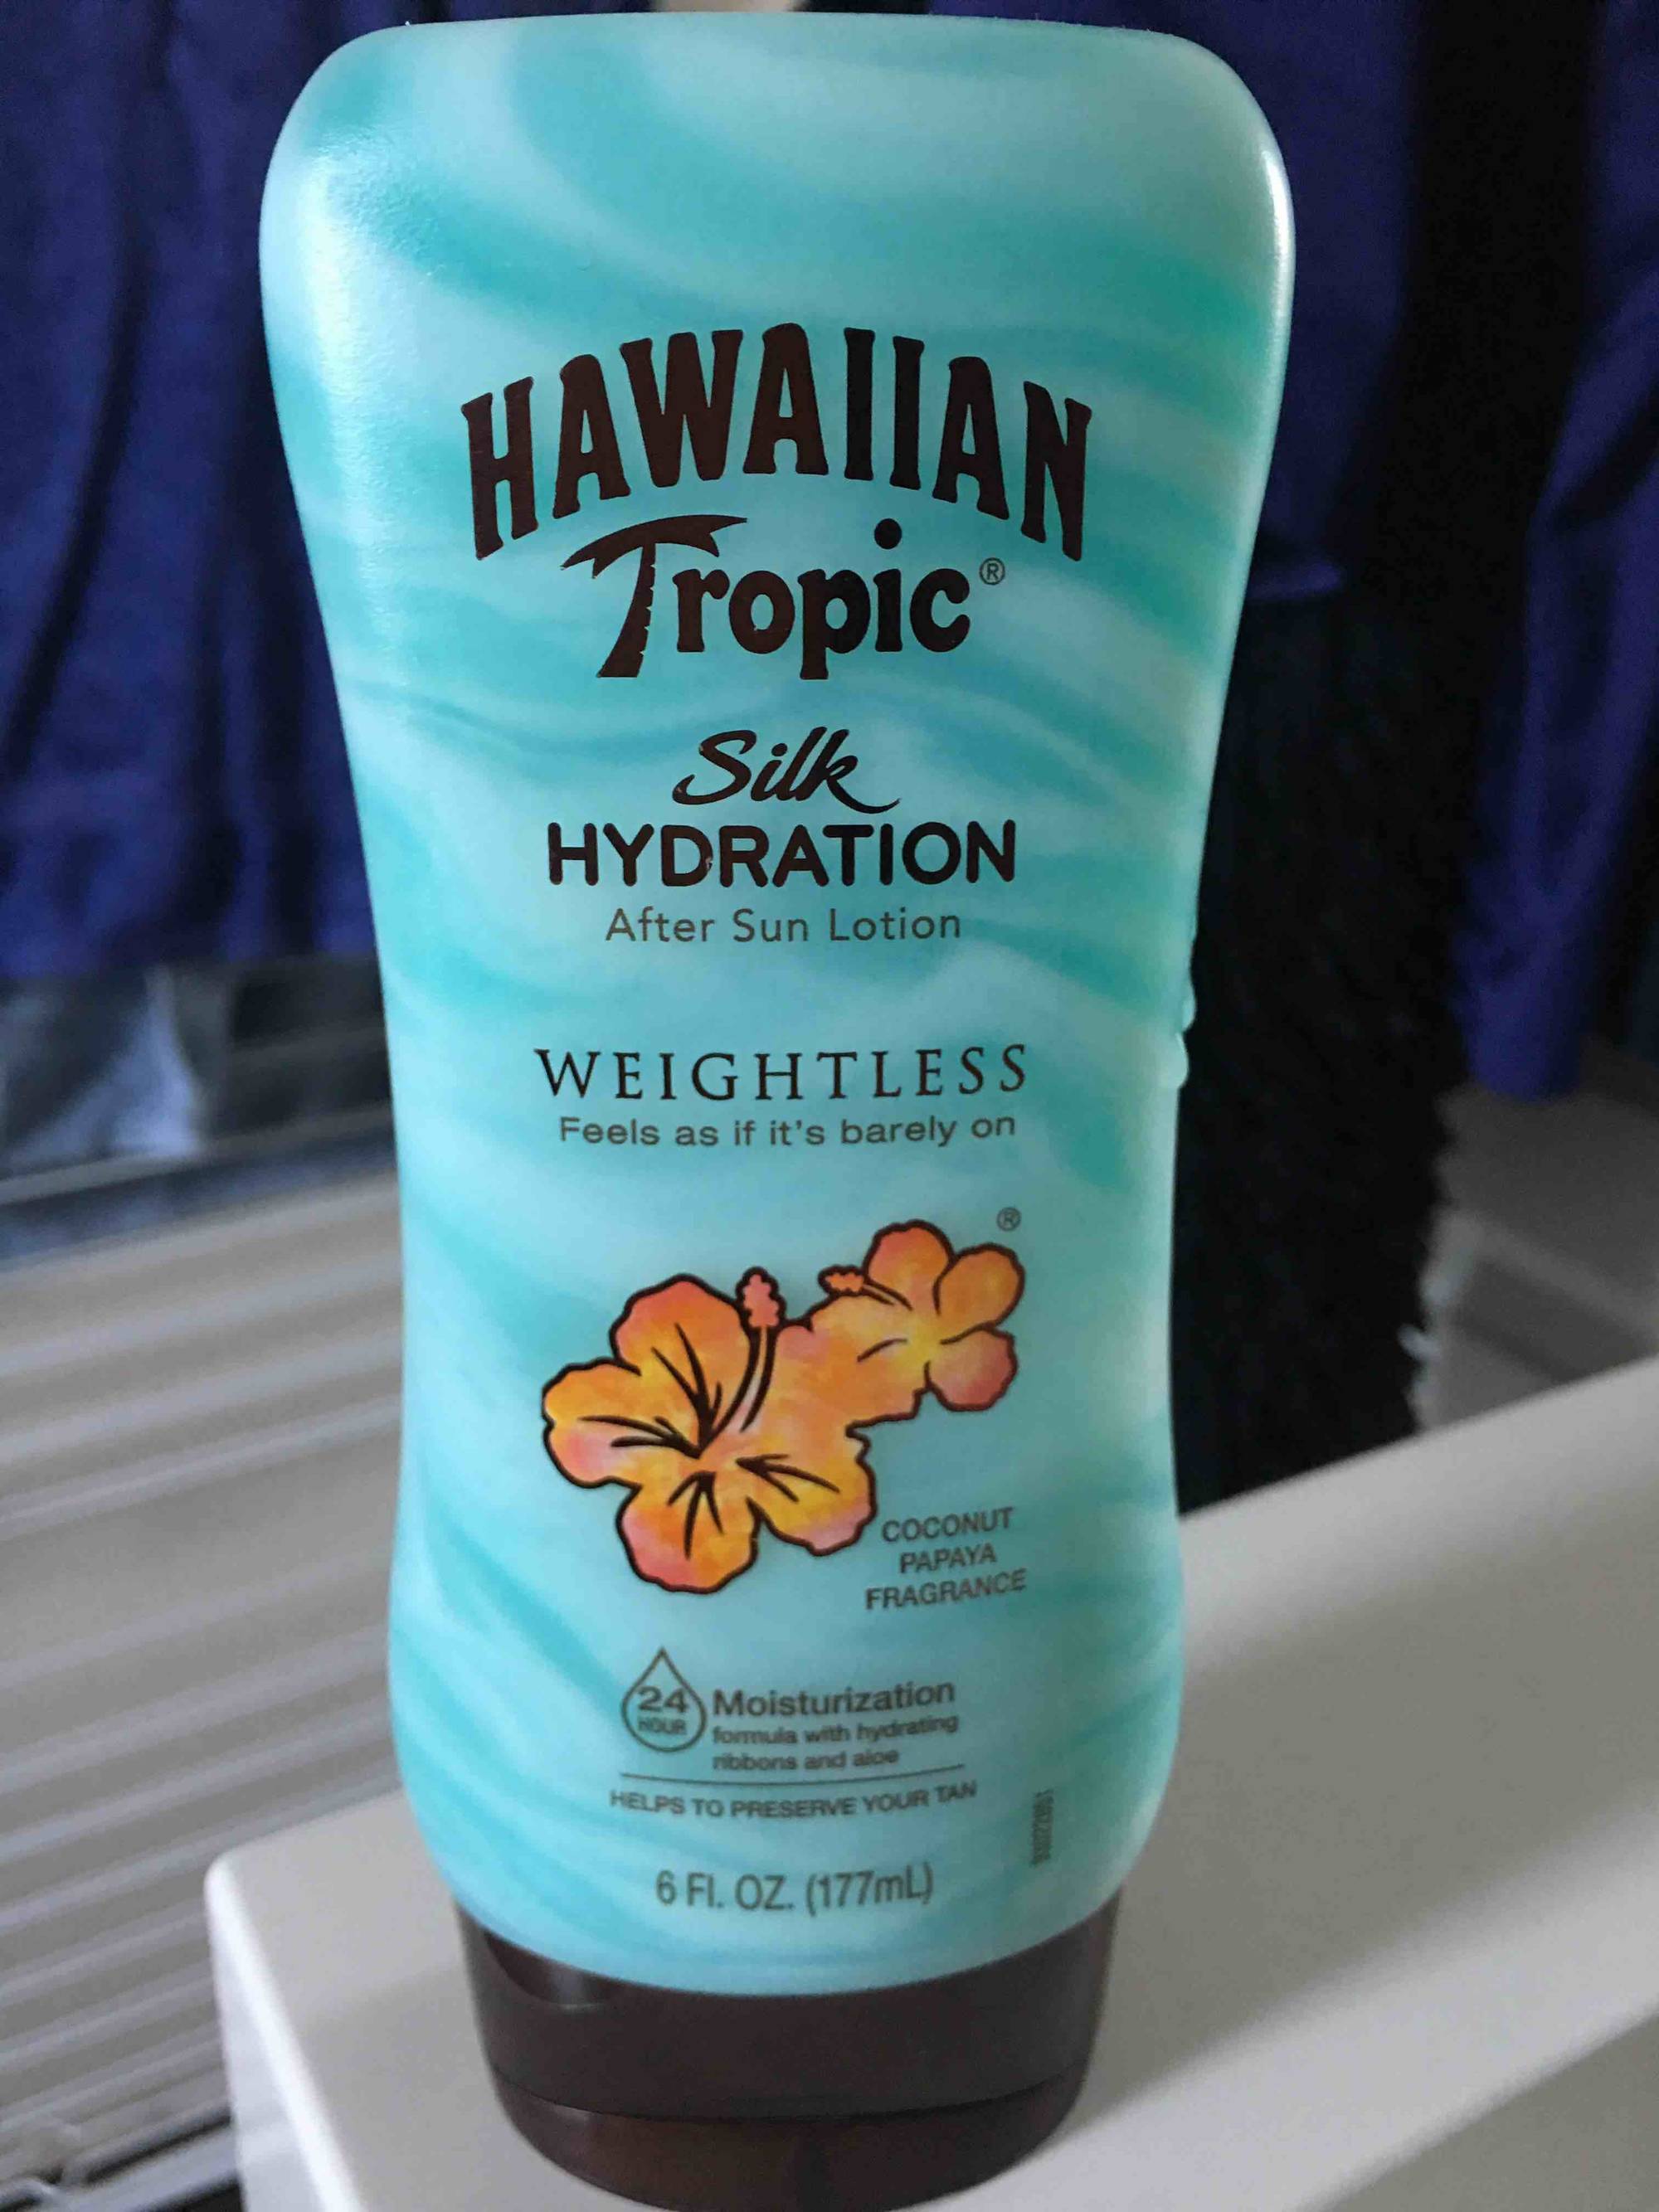 HAWAIIAN TROPIC - Silk hydration - After sun lotion